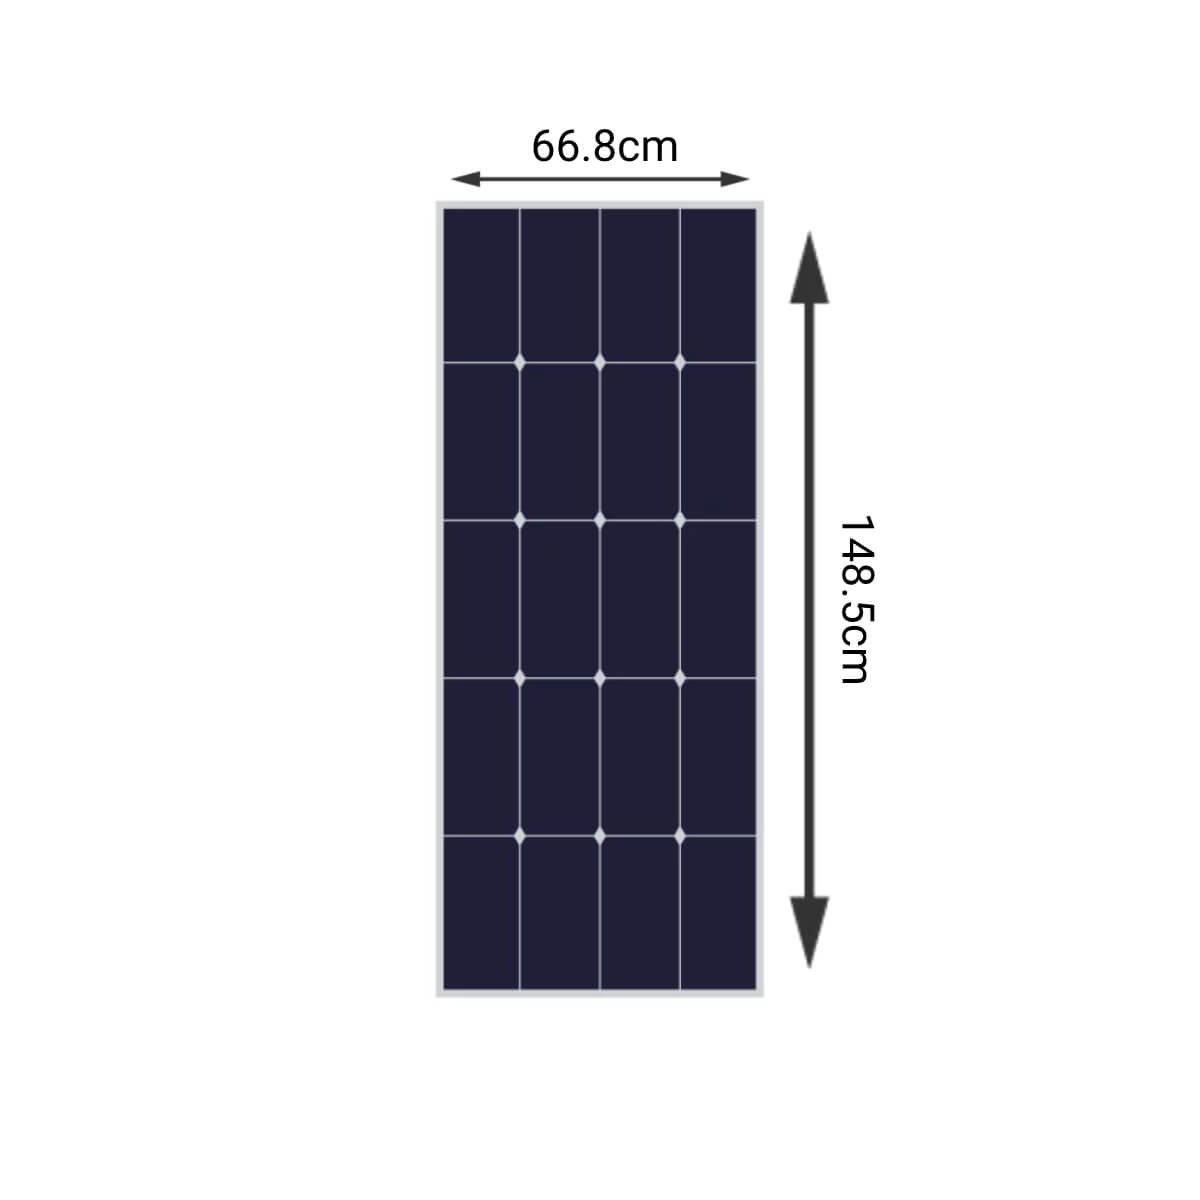 345W Solar Panel Kit – 3x 115W dimensions